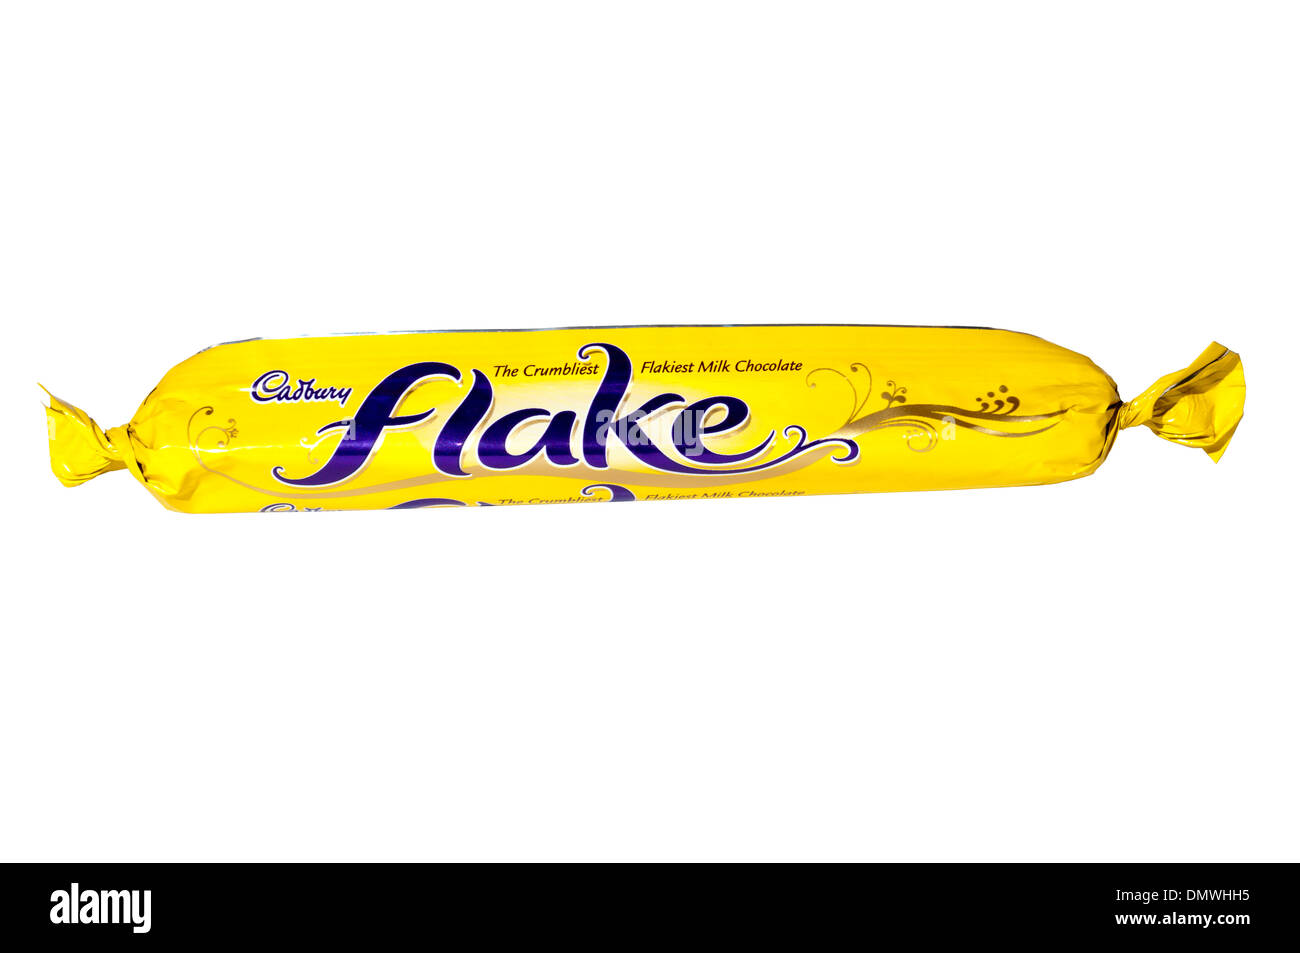 A Cadbury's Flake chocolate bar. Stock Photo